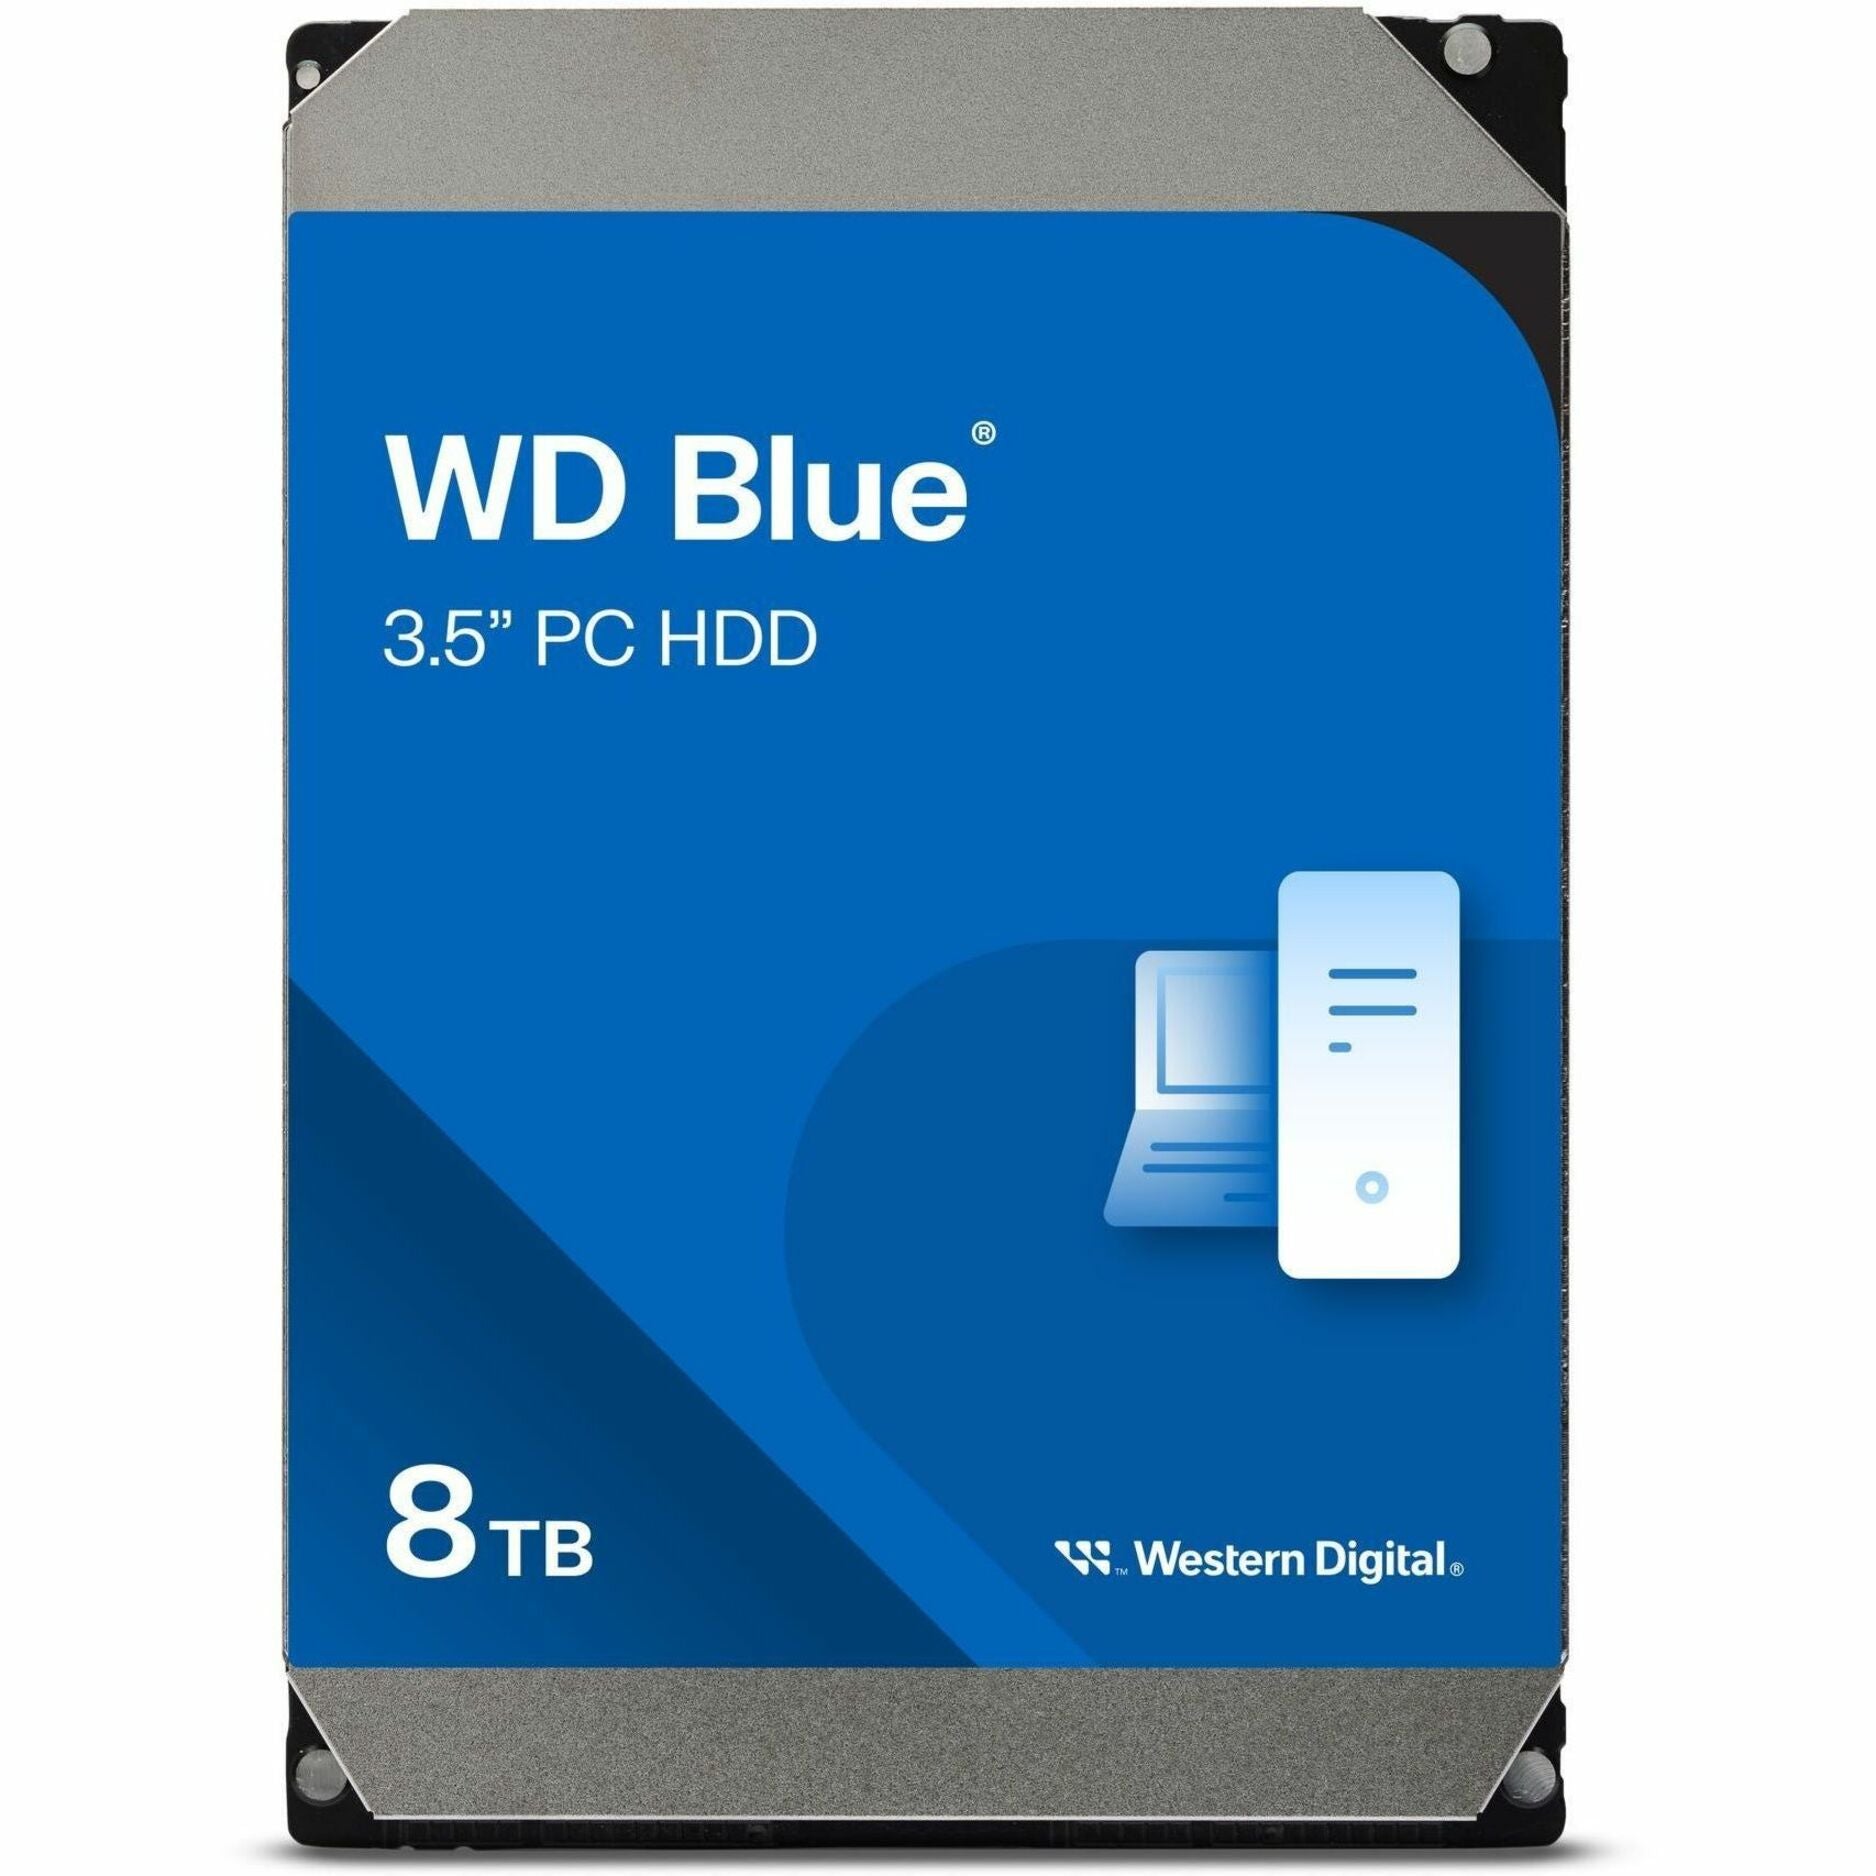 WD Blue WD80EAAZ 8 TB Hard Drive - 3.5" Internal - SATA (SATA/600) - Conventional Magnetic Recording (CMR) Method